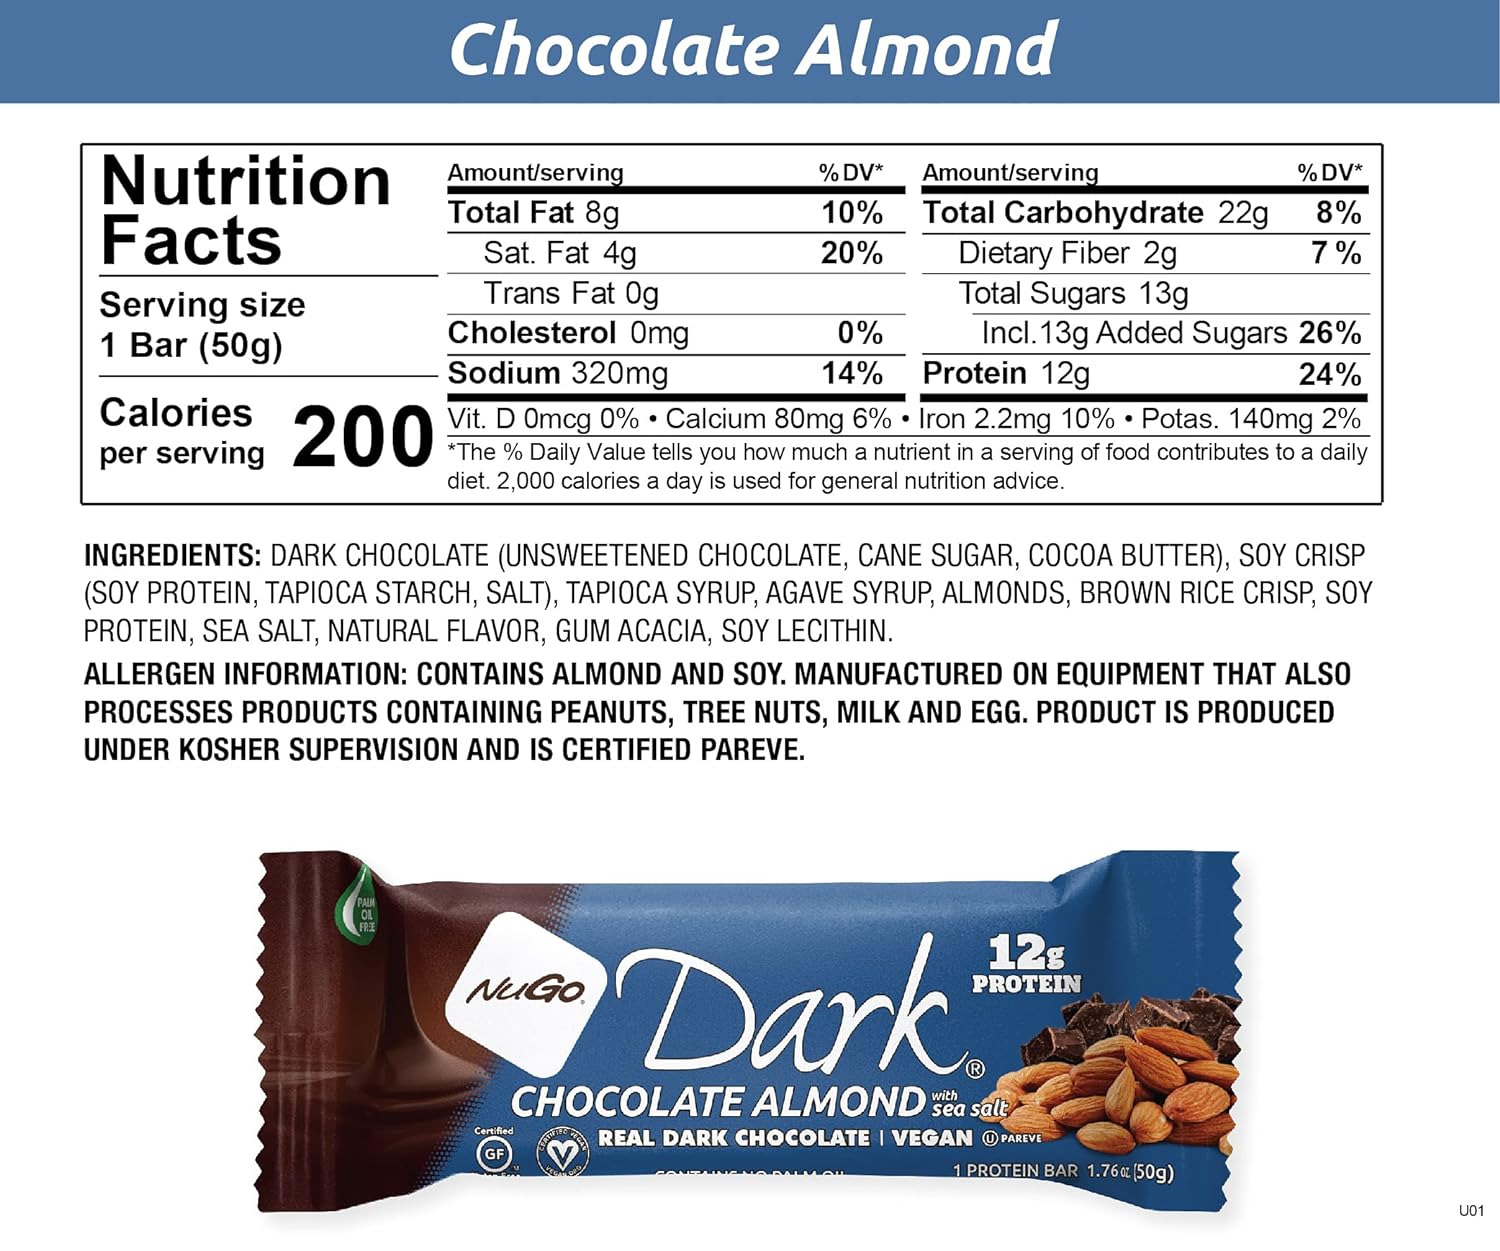 NuGo Dark Chocolate Almond with Sea Salt, 12g Vegan Protein, 200 Calor